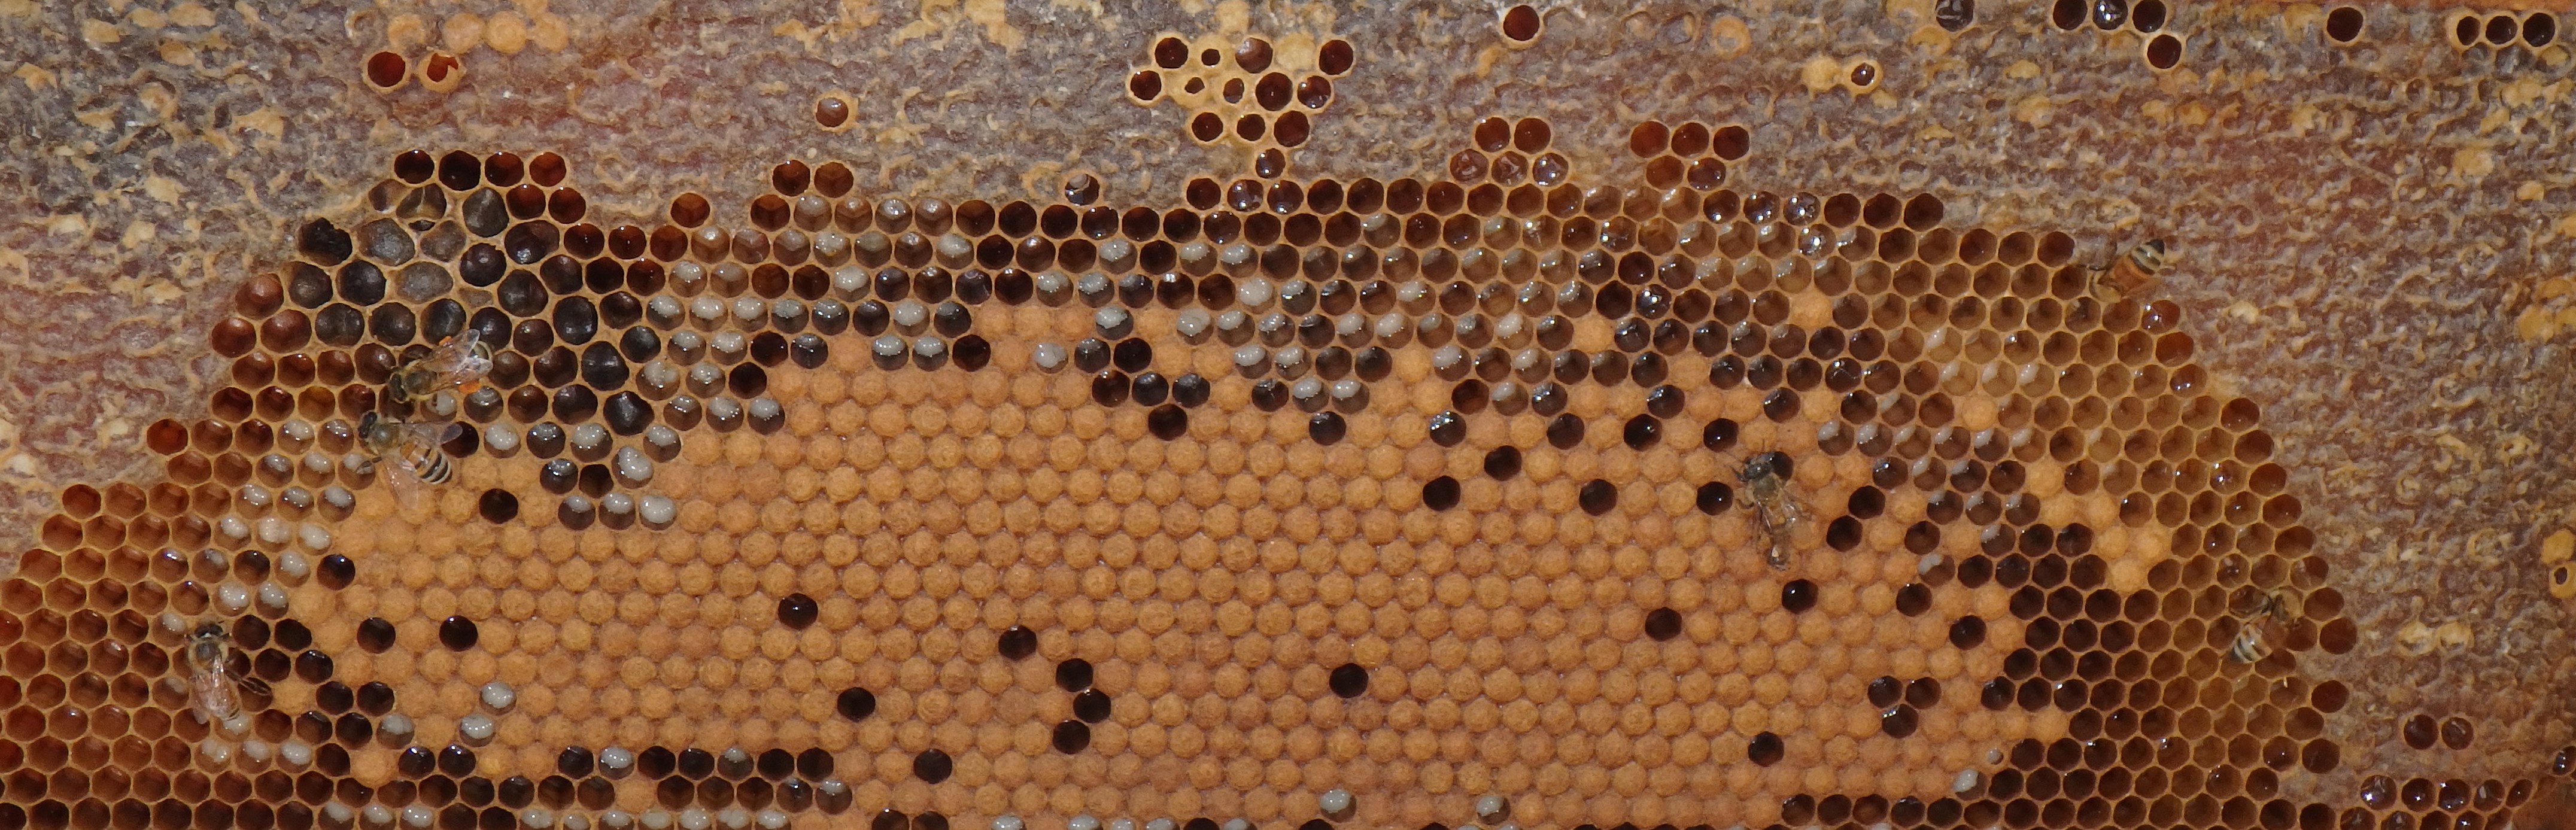 Honey Bee Brood Frame